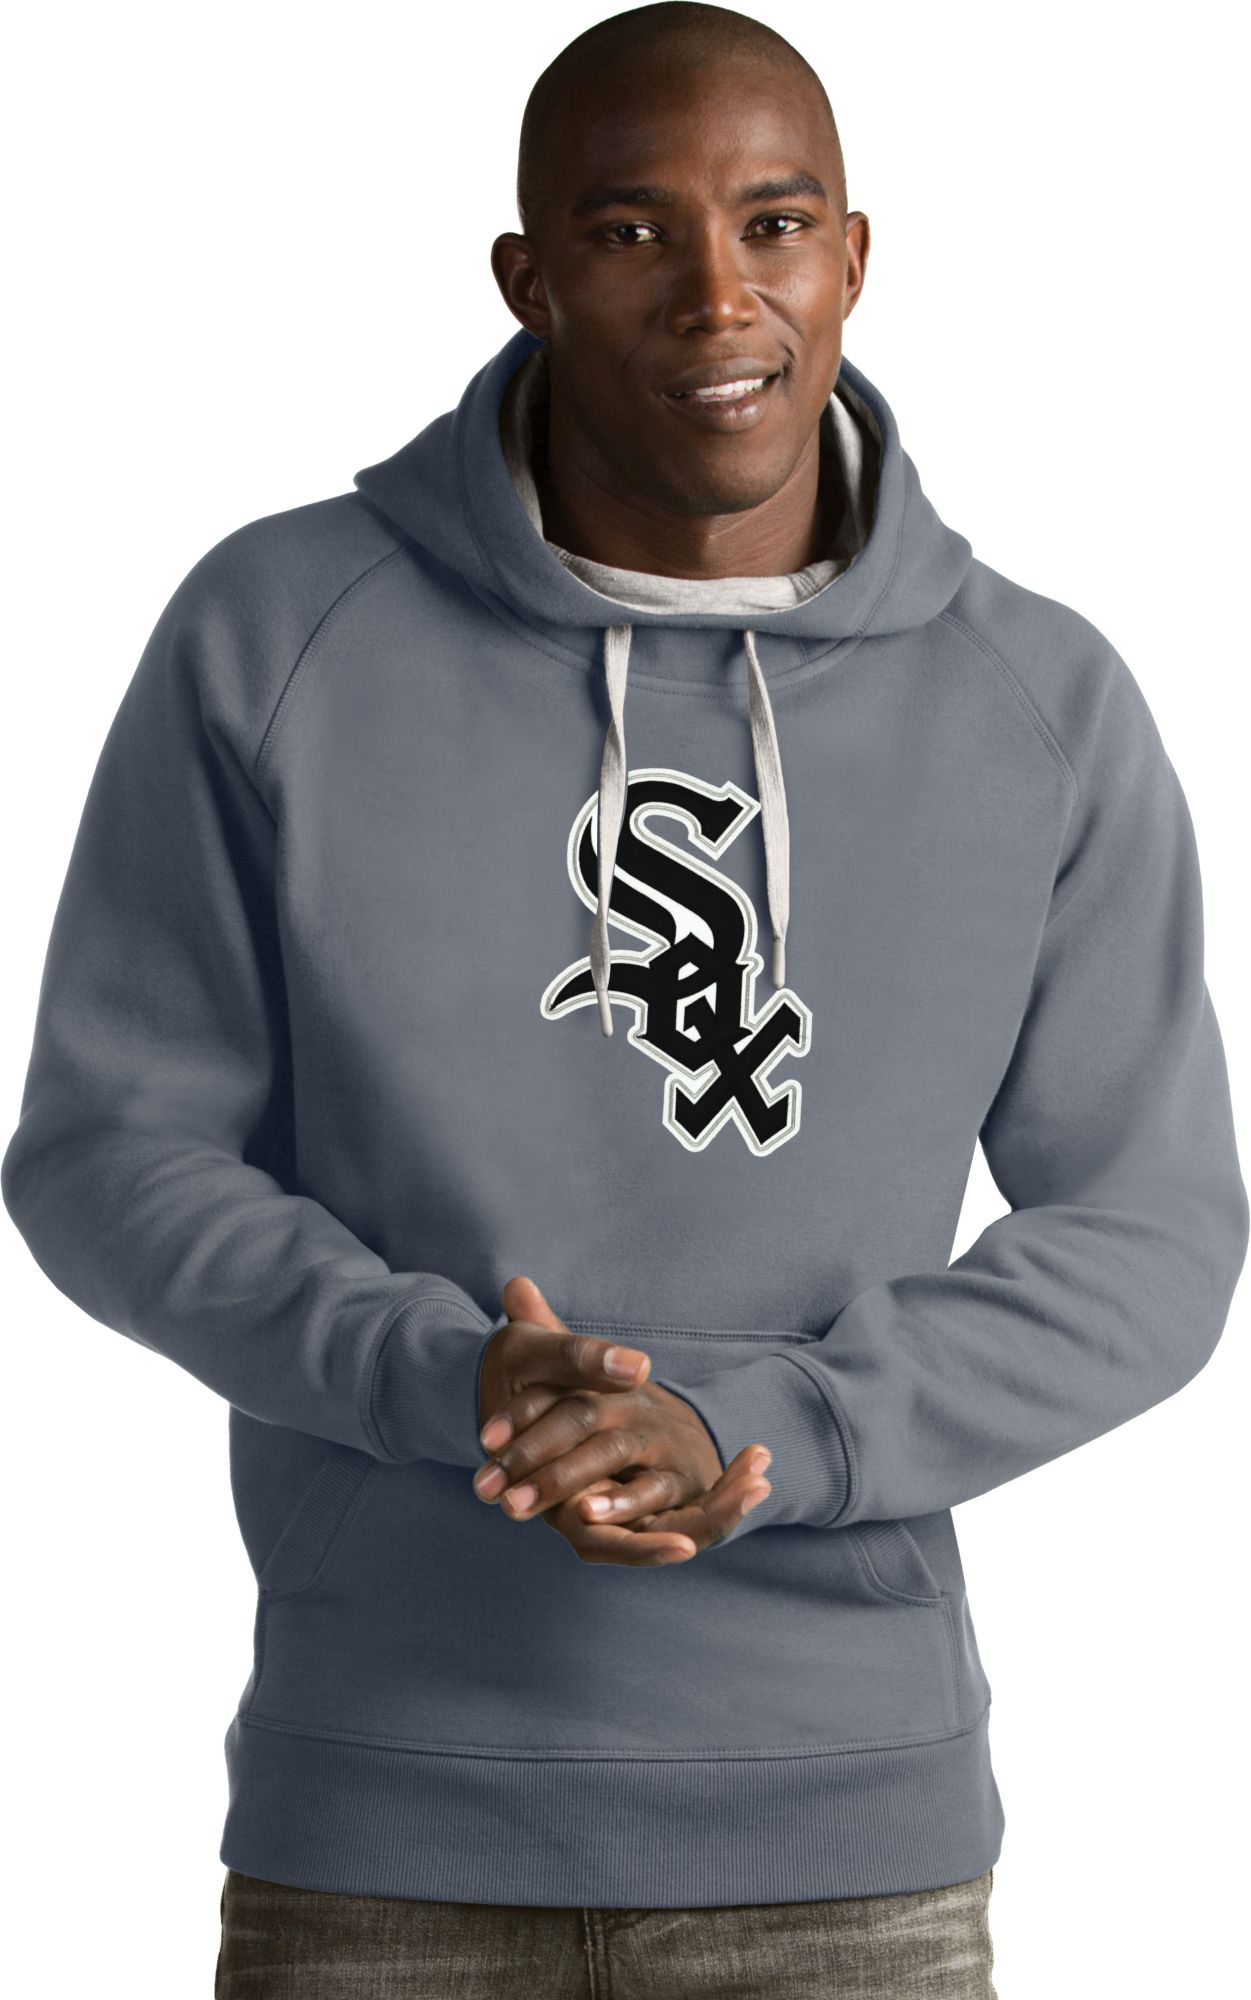 Nike Men's Chicago White Sox Luis Robert #88 Black 2021 City Connect Cool  Base Jersey